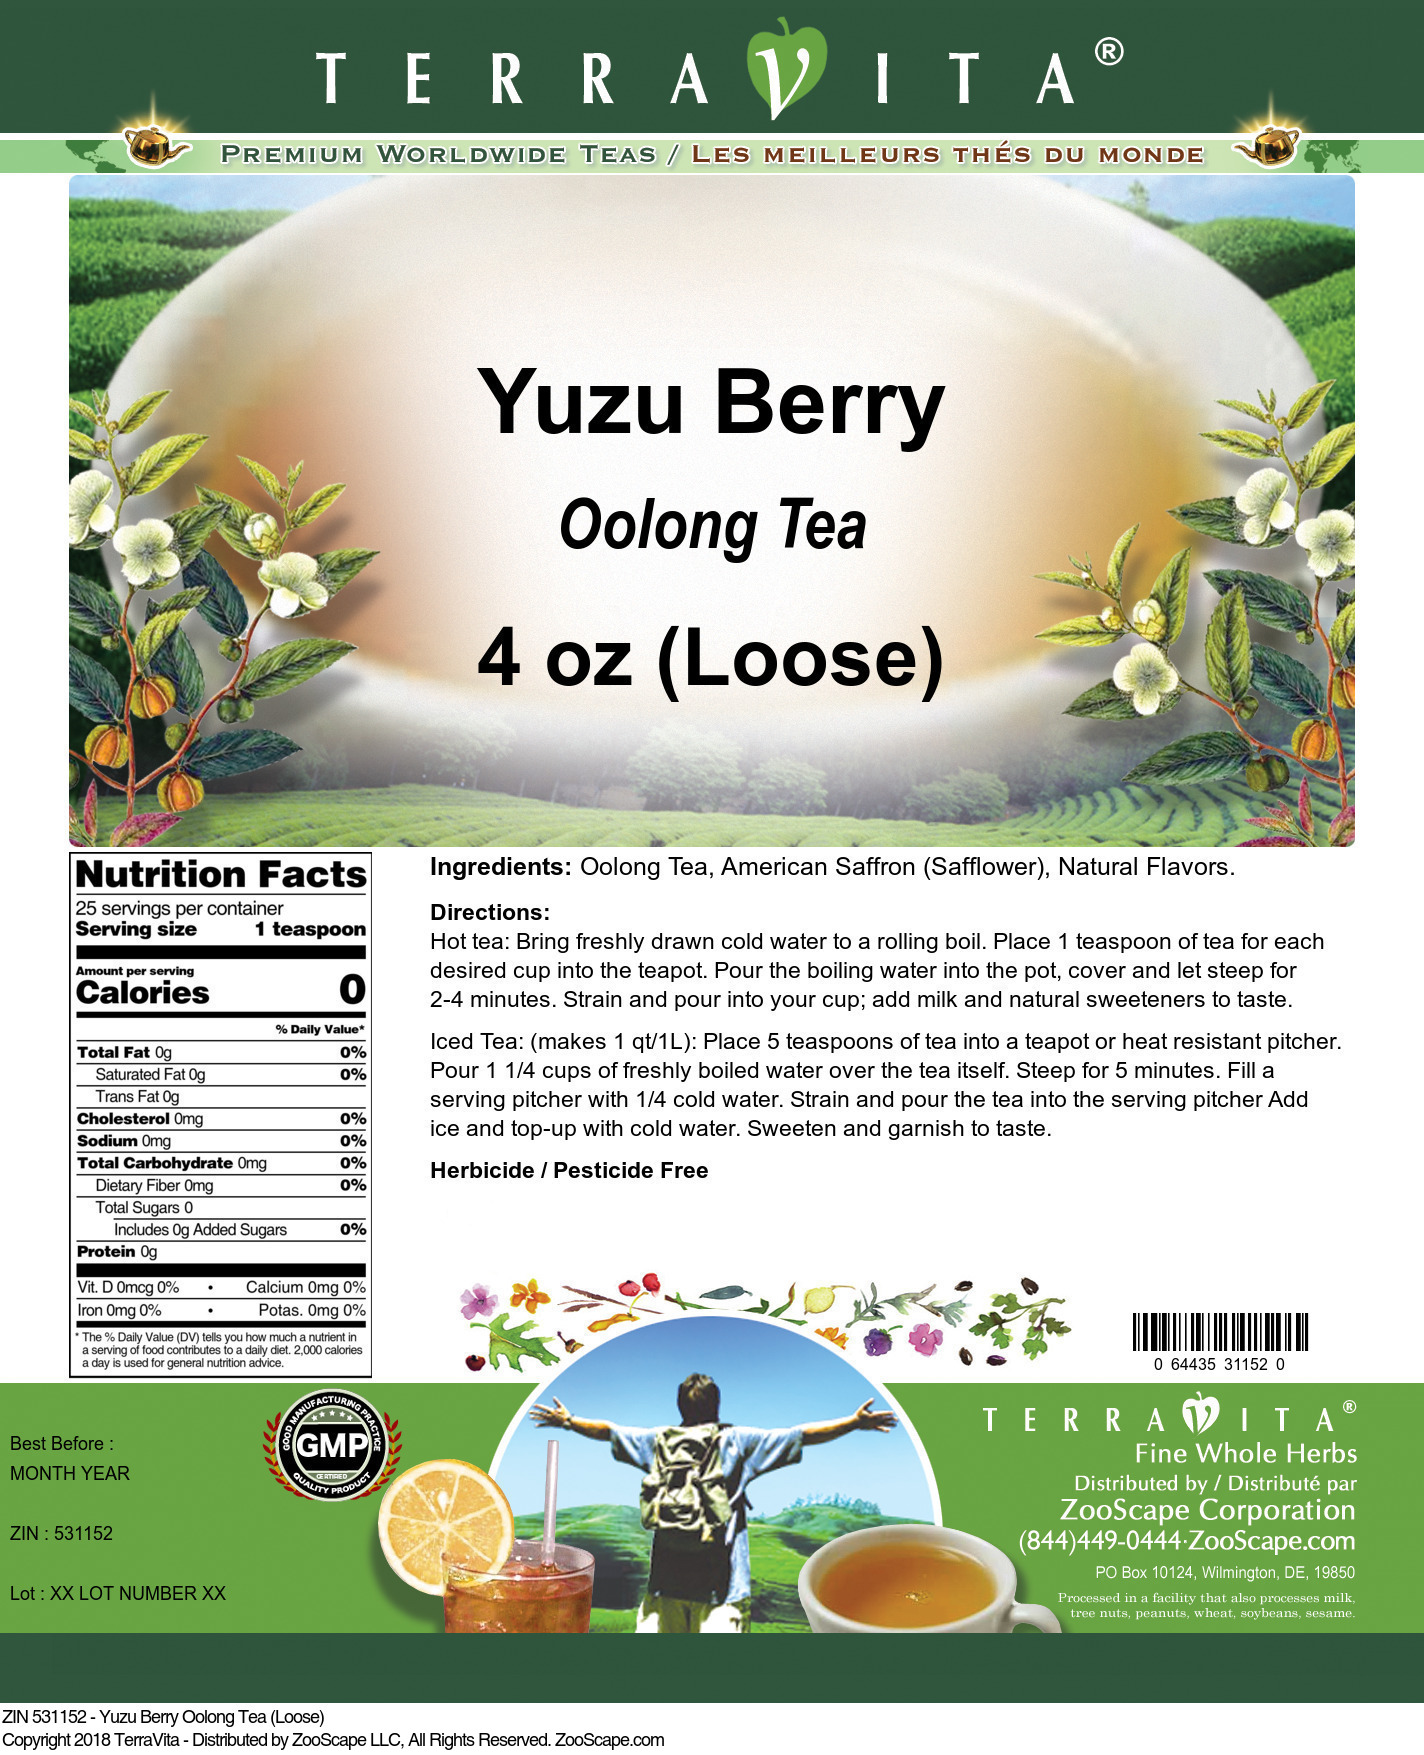 Yuzu Berry Oolong Tea (Loose) - Label